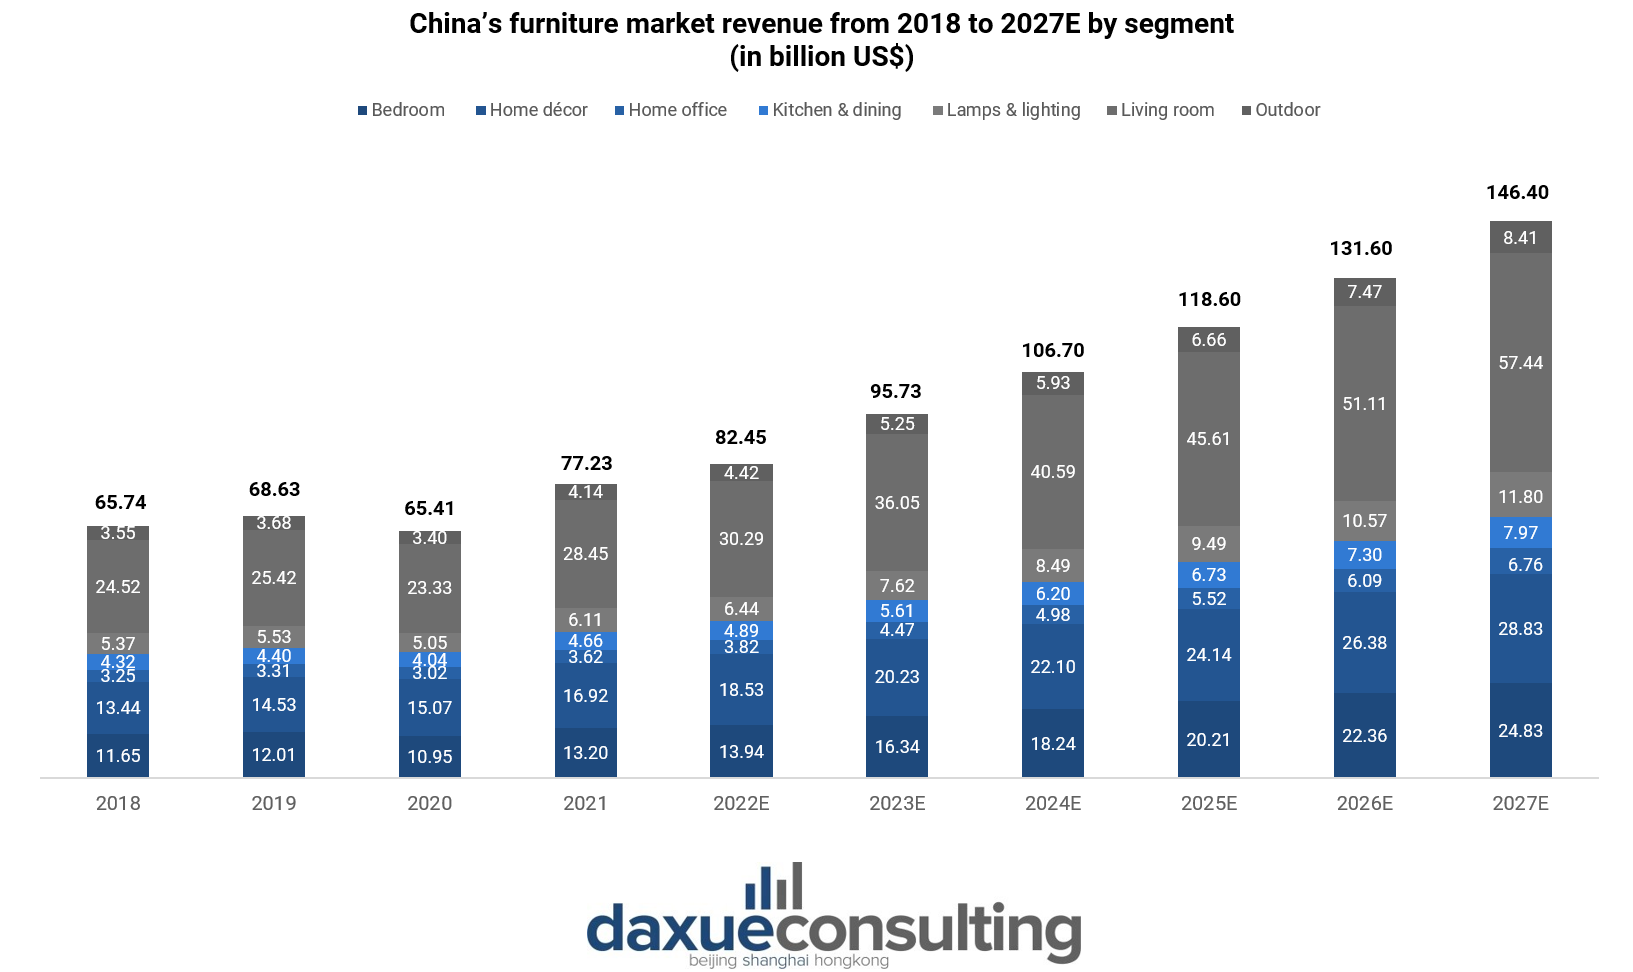 China’s furniture market revenue 